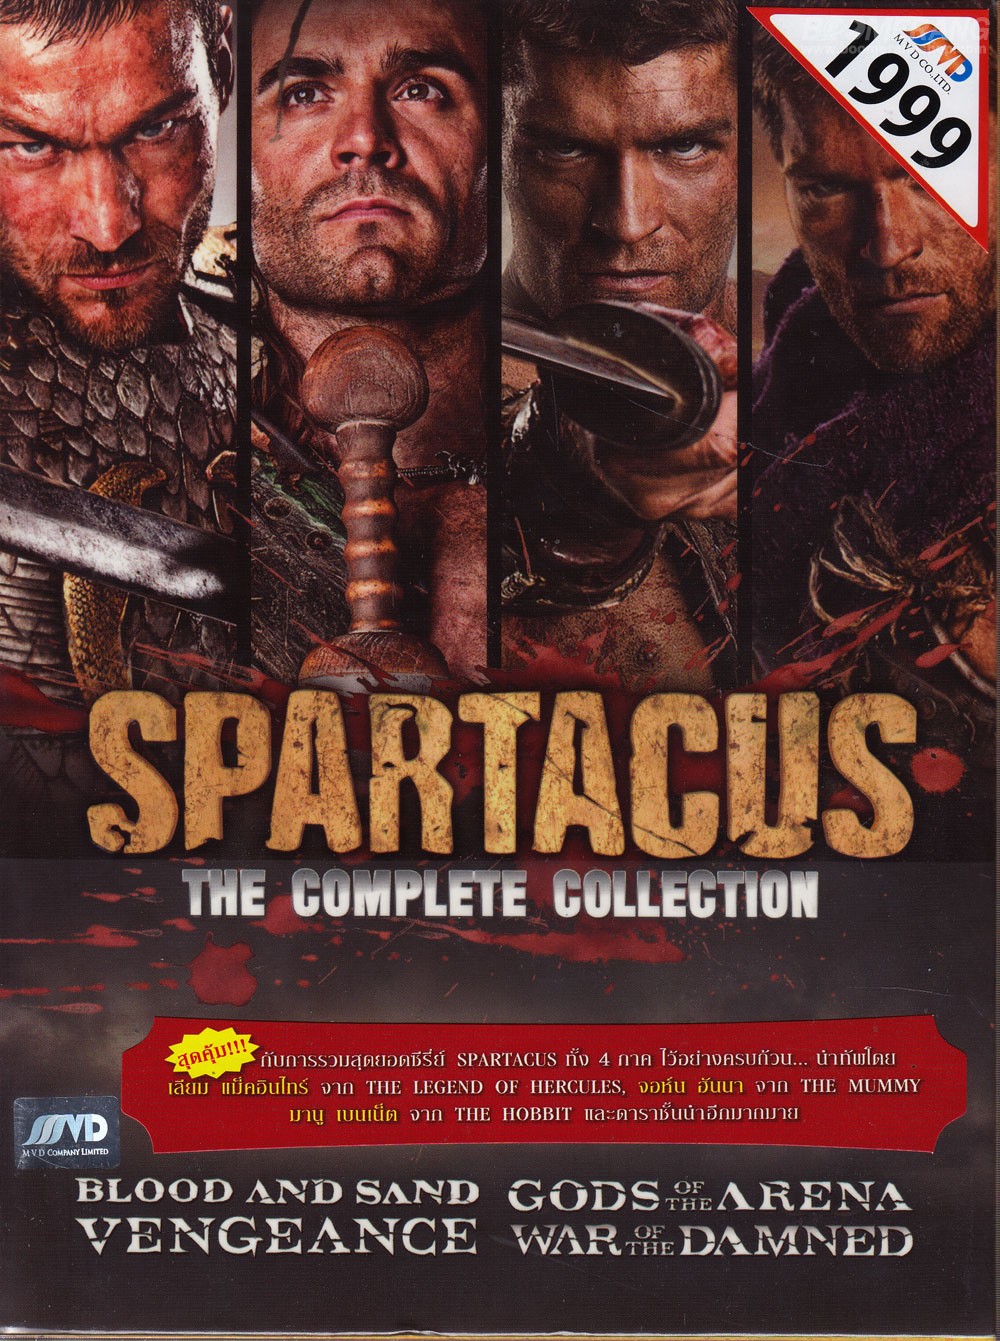 spartacus season 1 in hindi dubbed watch online